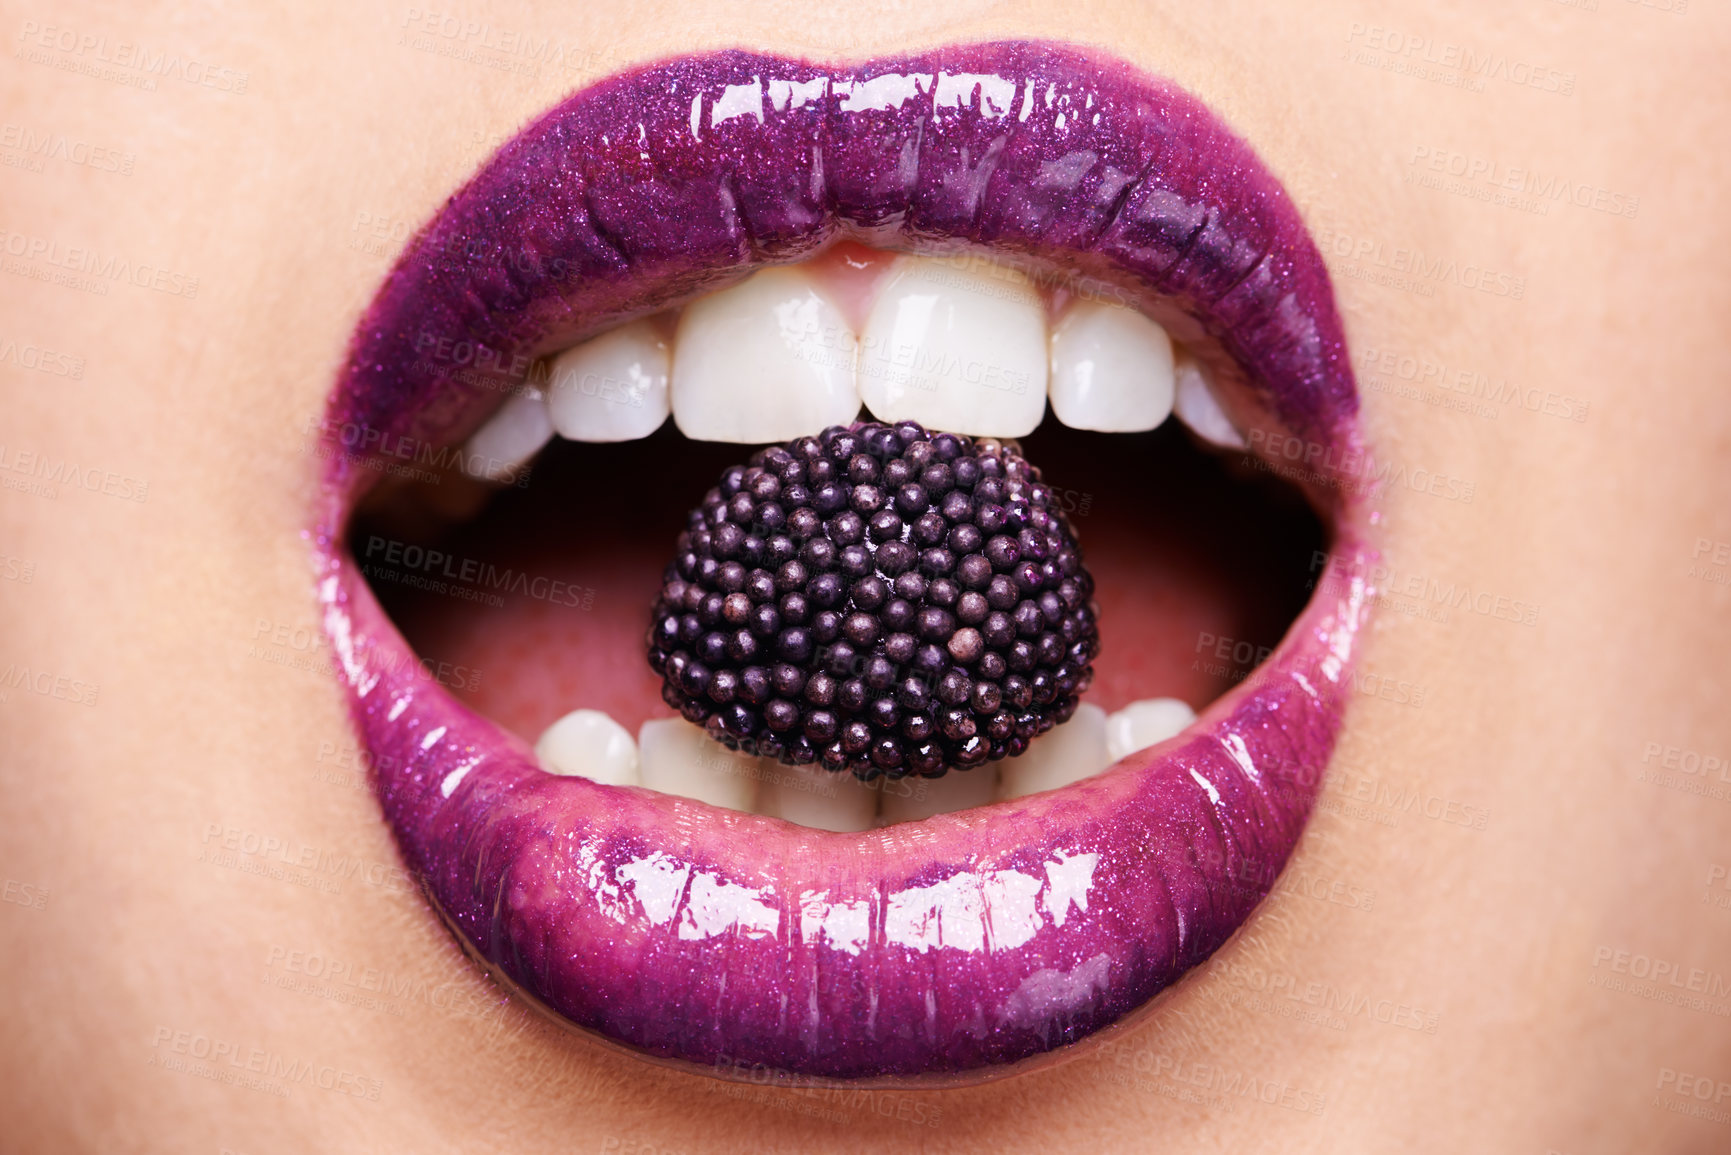 Buy stock photo Shot of a woman wearing purple lipstick and biting into a purple sweet